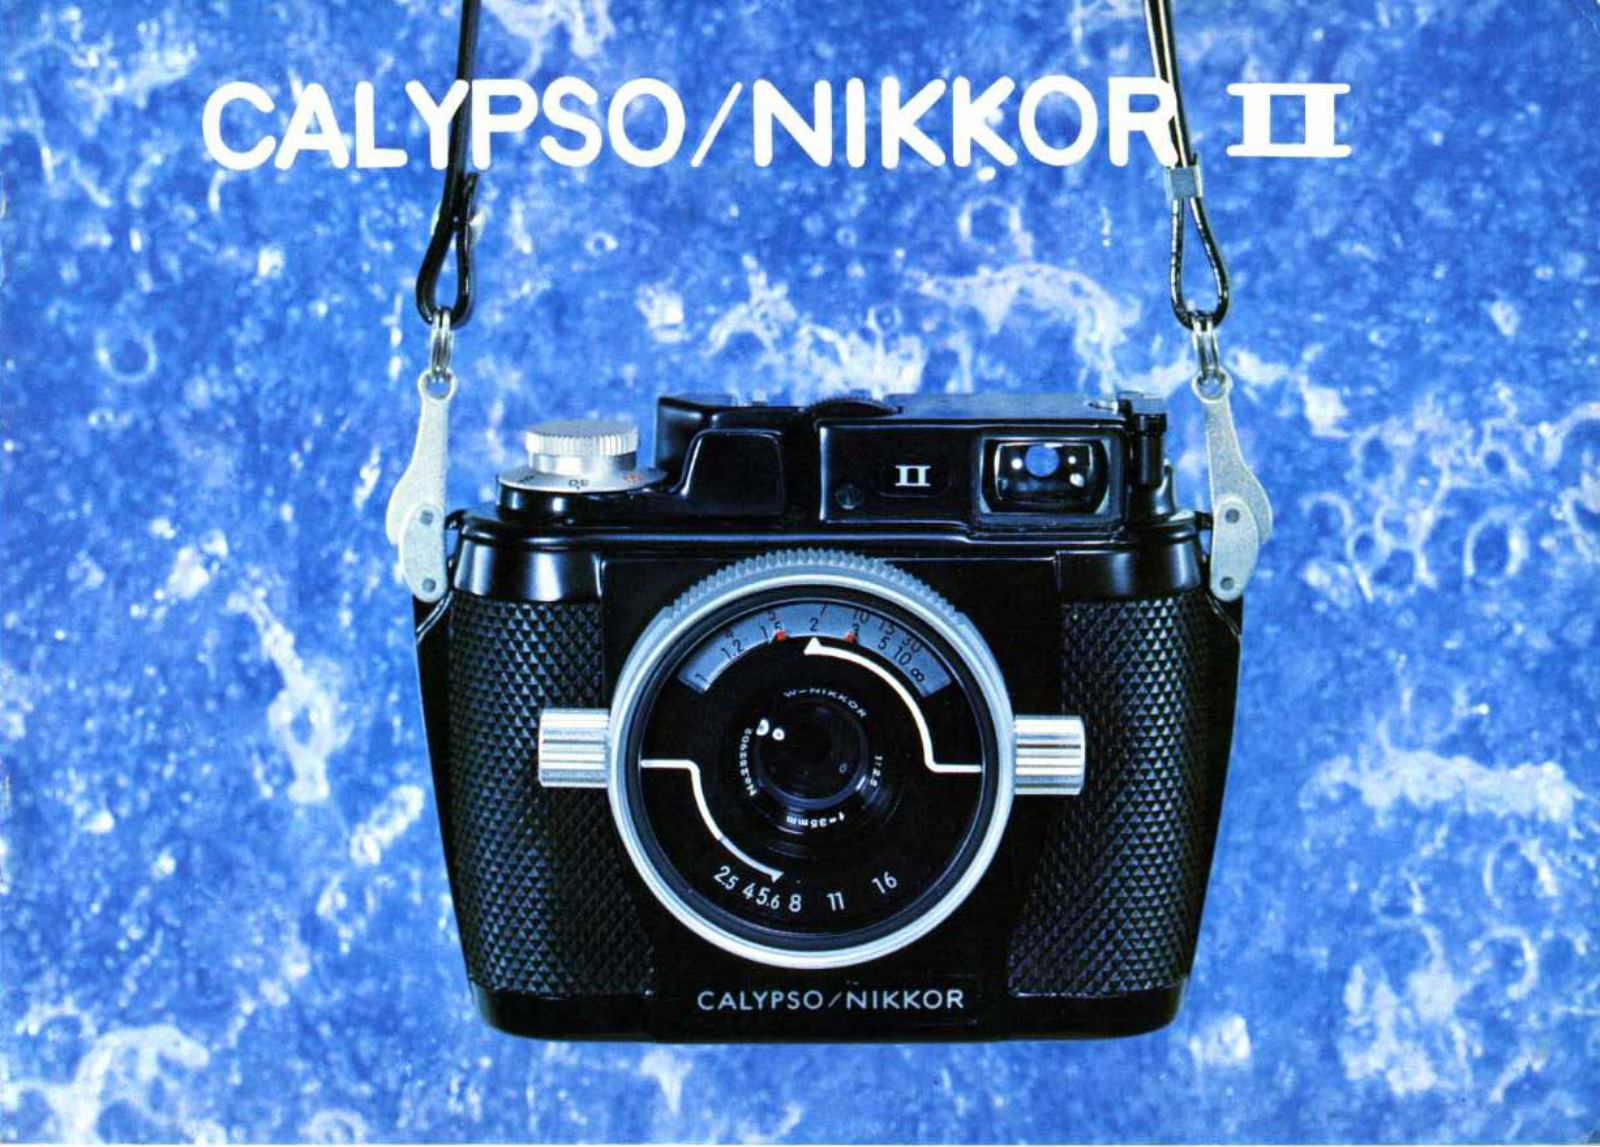 NIKON CALYPSO, NIKKOR II User Manual